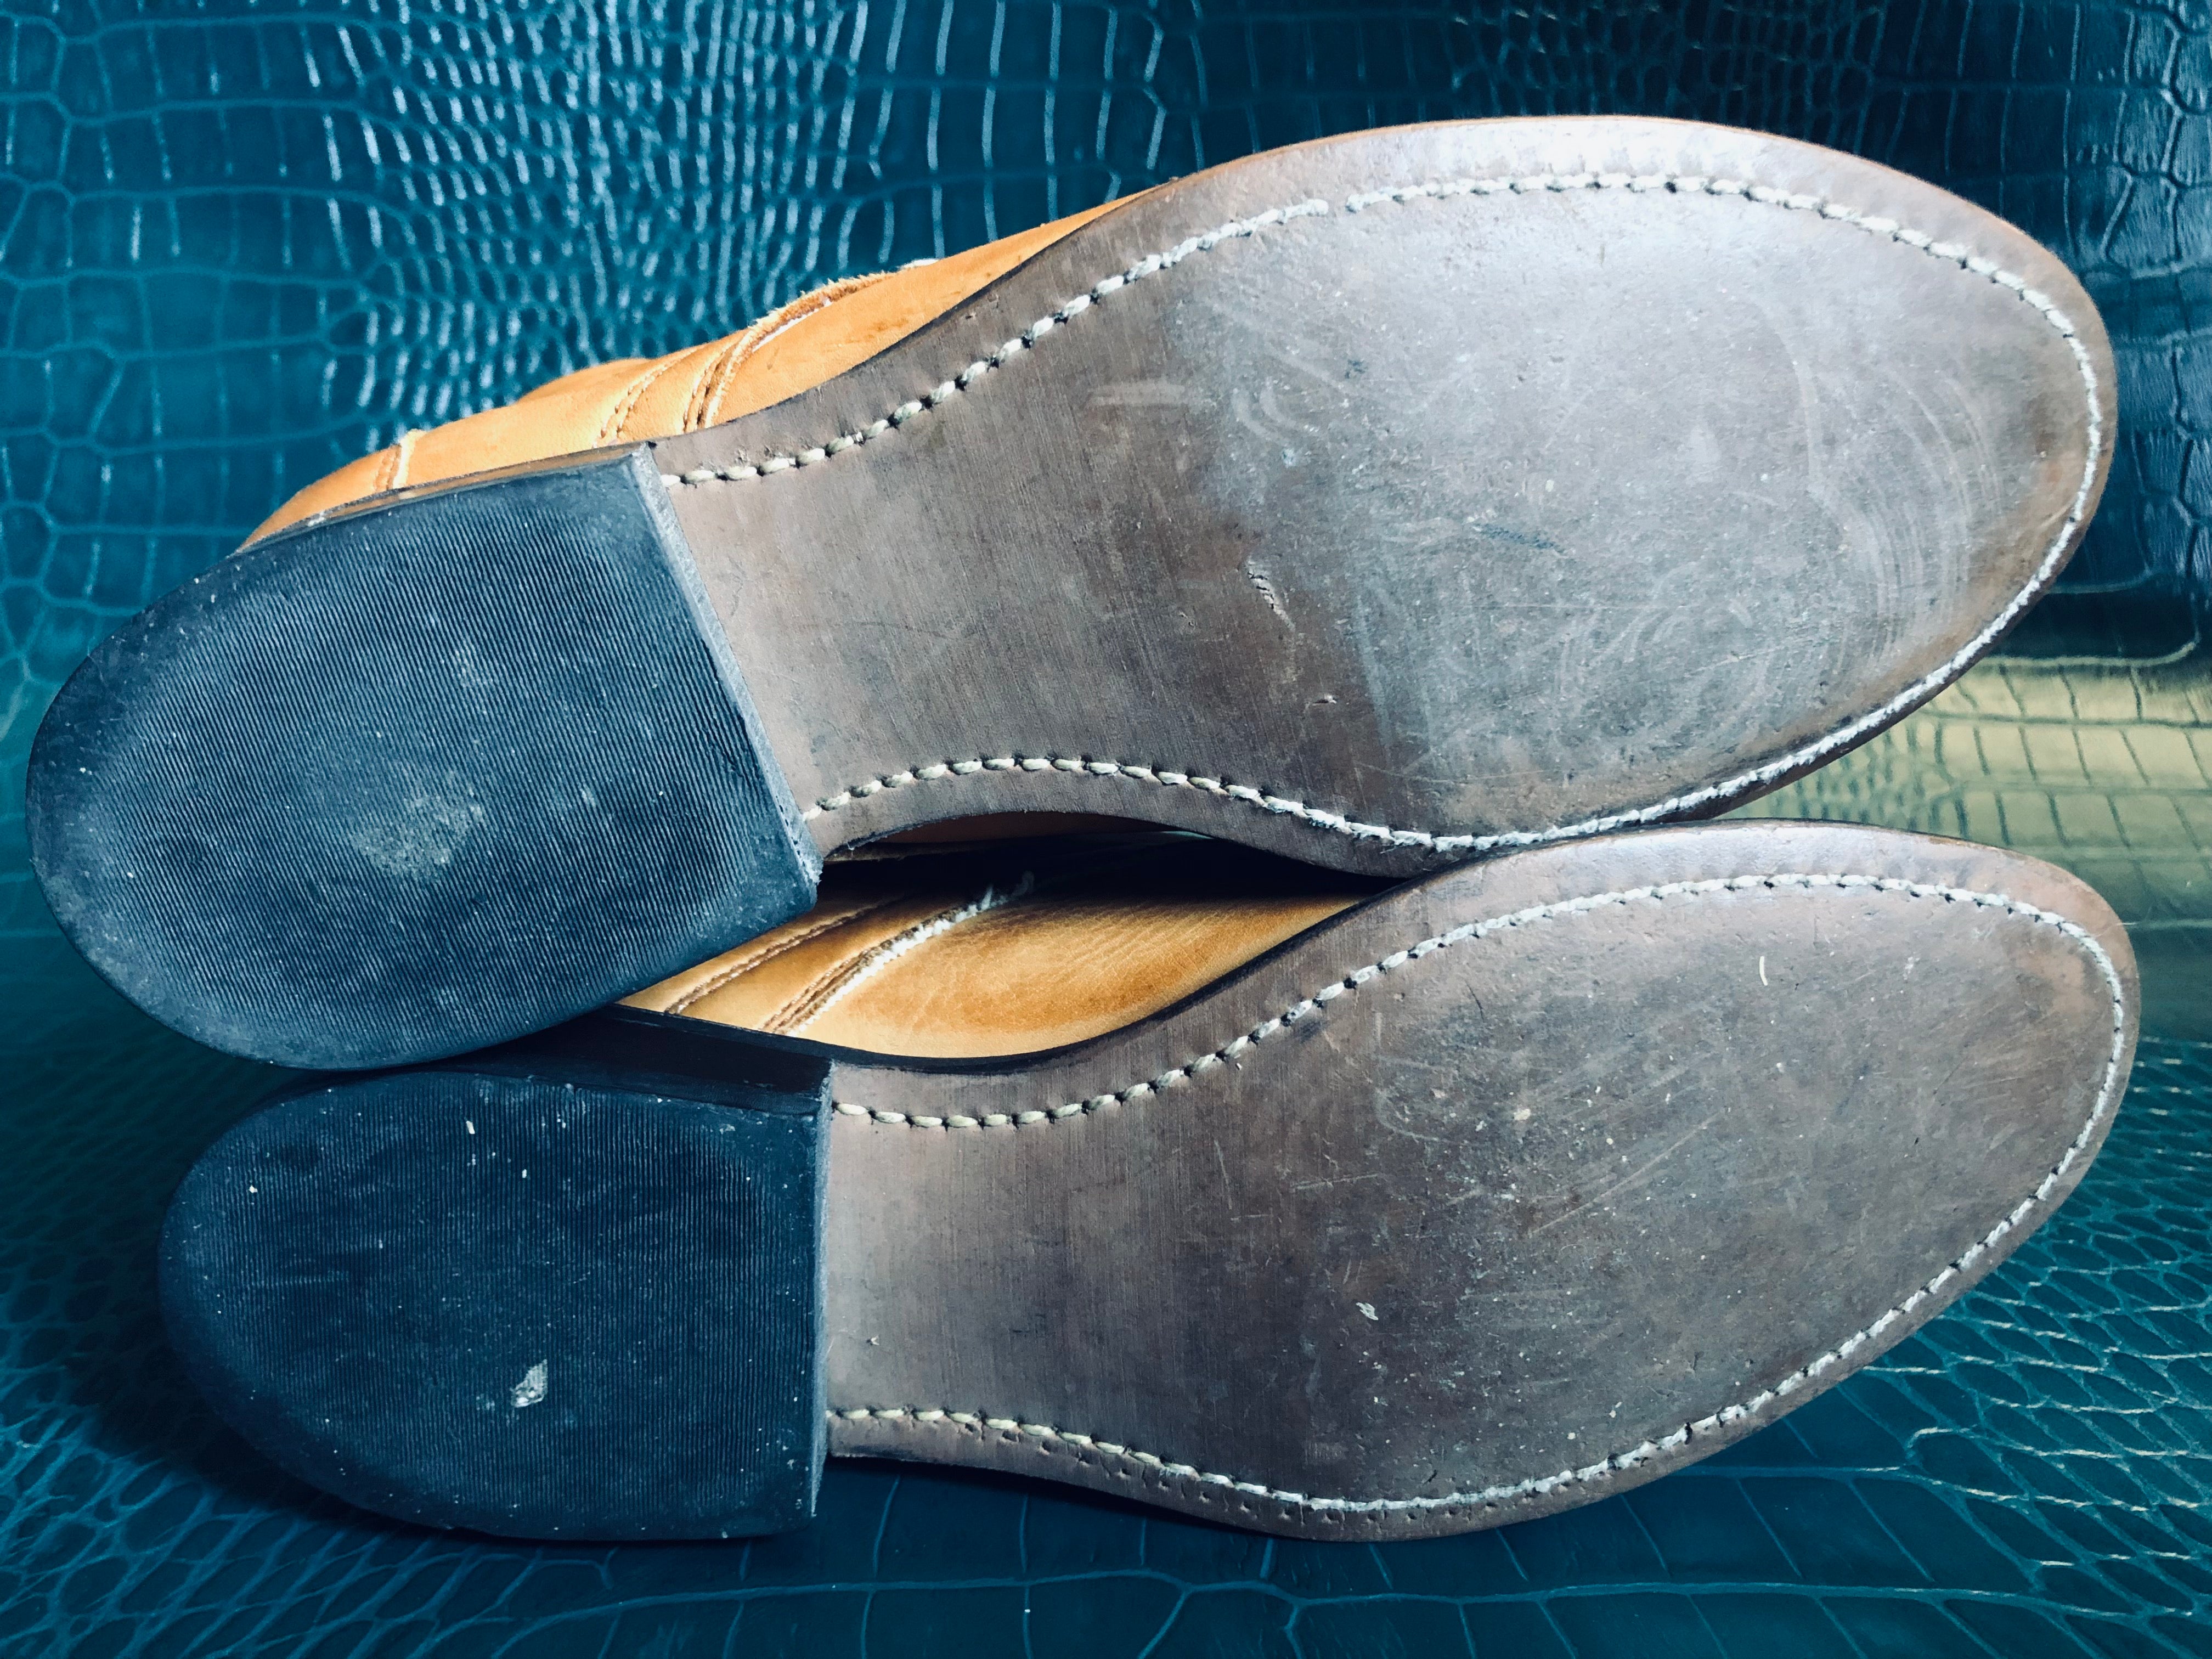 Vintage Laredo Lace Up Roper Boots 6.5 (W)